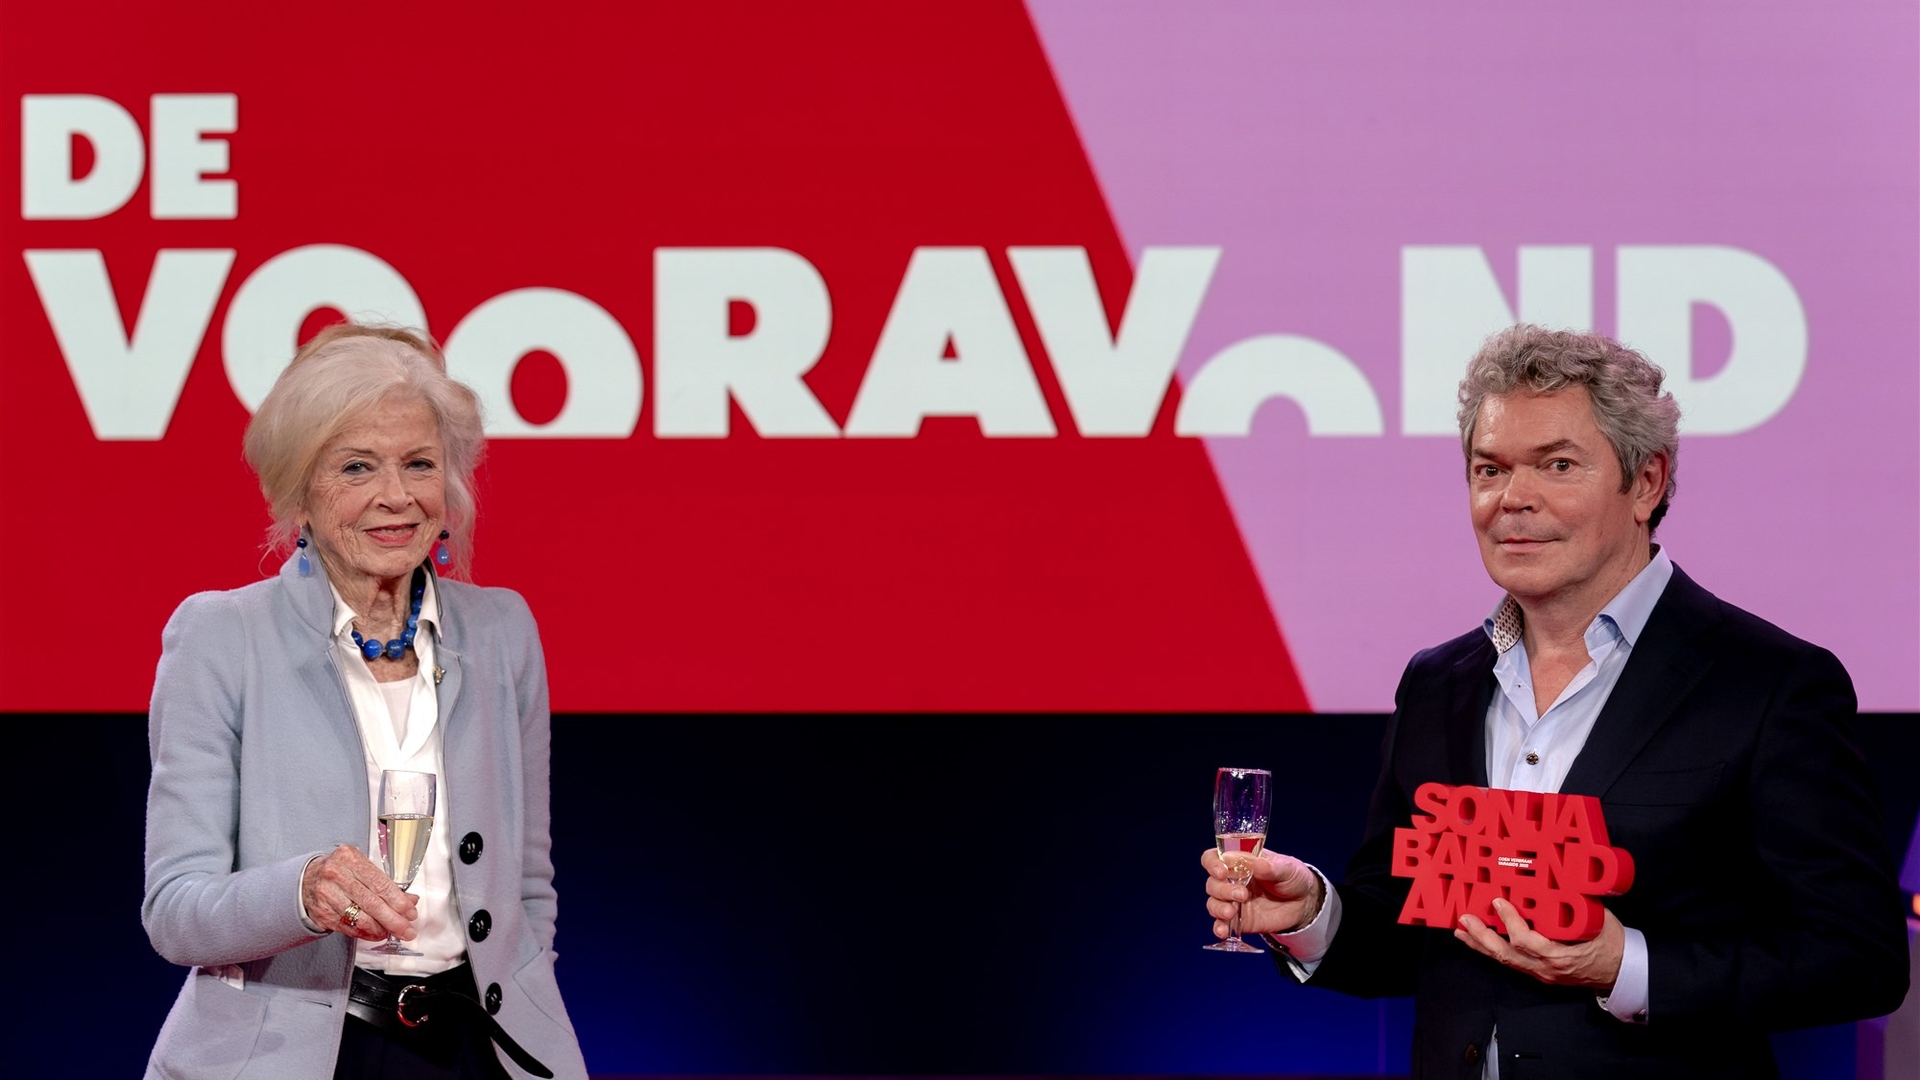 Coen Verbraak wint Sonja Barend Award 2020